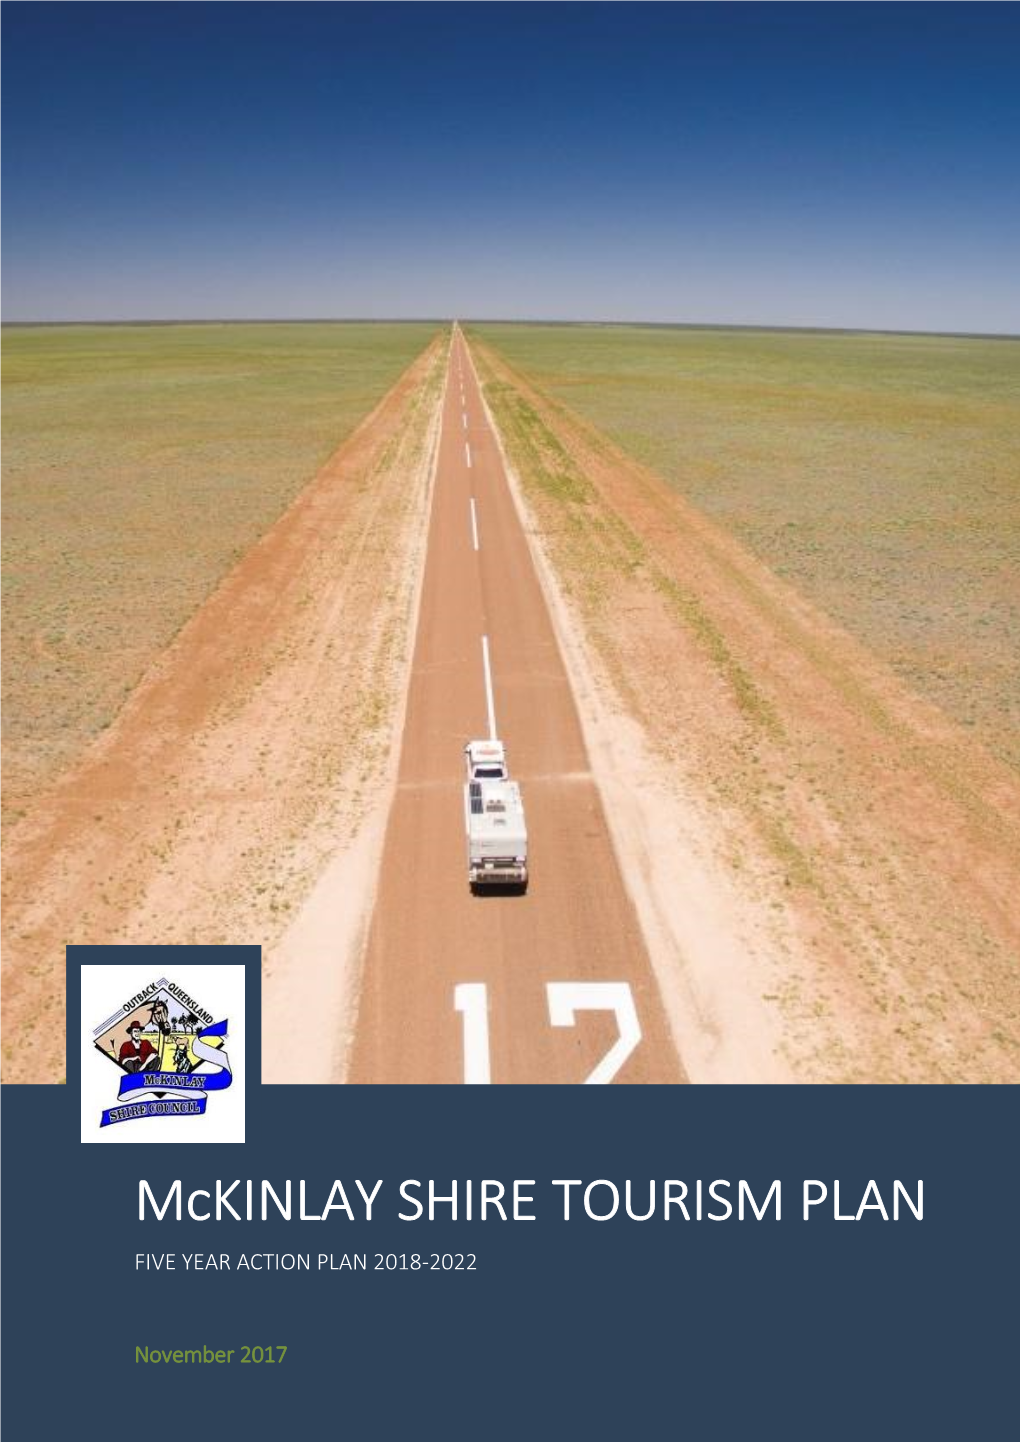 Mckinlay SHIRE TOURISM PLAN FIVE YEAR ACTION PLAN 2018-2022